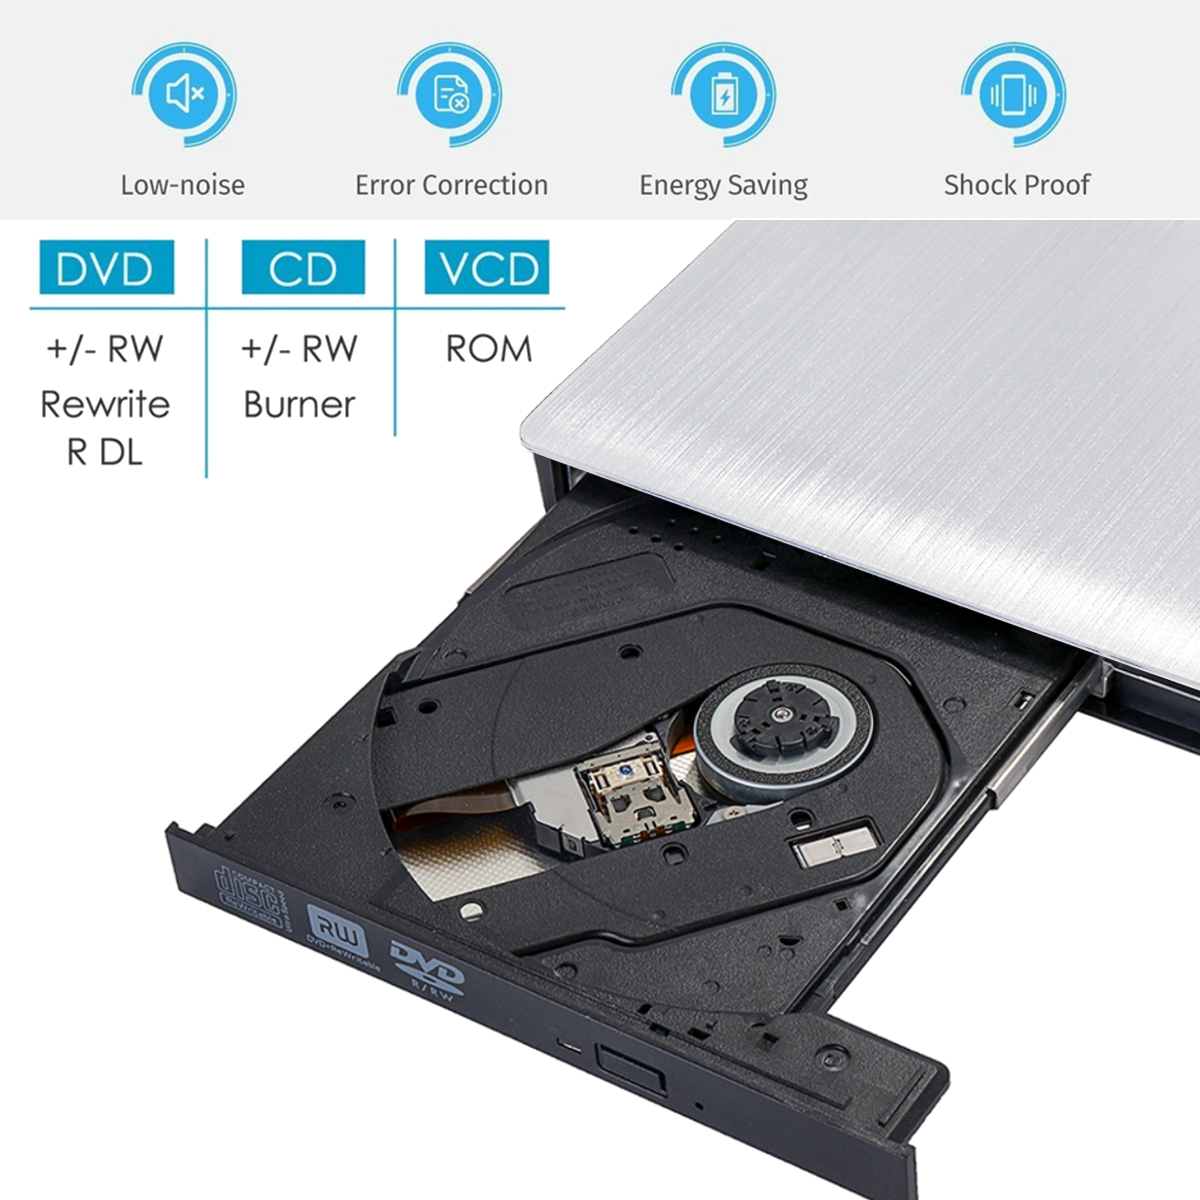 USB 3.0 Slim External DVD Optical Drive DVD-RW CD-RW Combo Drive Burner Reader Player 8